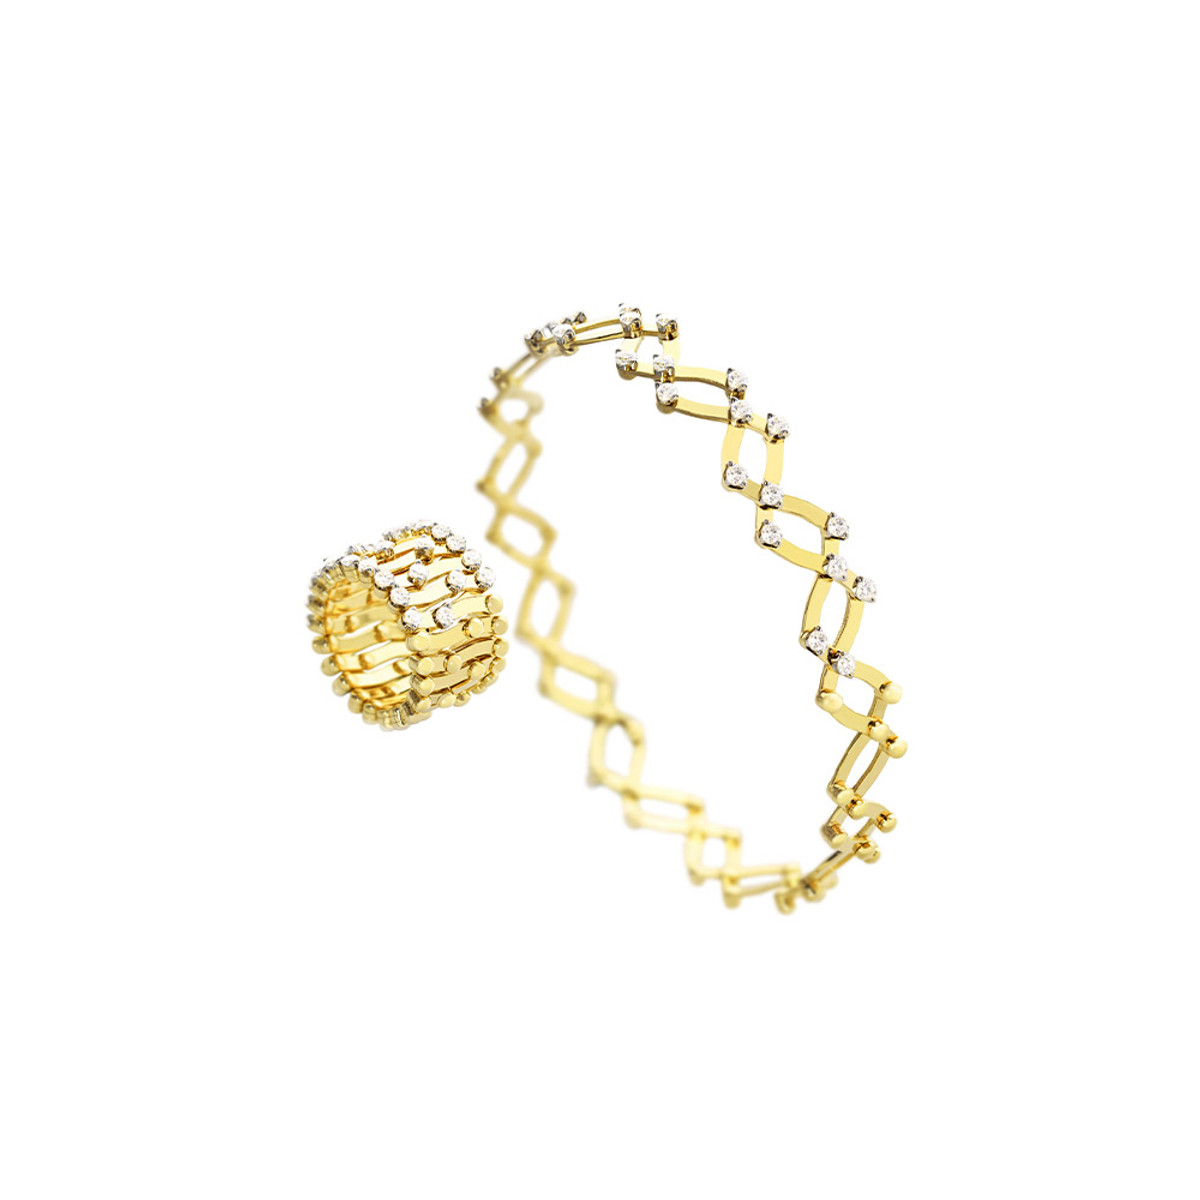 Serafino Consoli 18K White & Yellow Gold Diamond Ring Bracelet-56550 Product Image